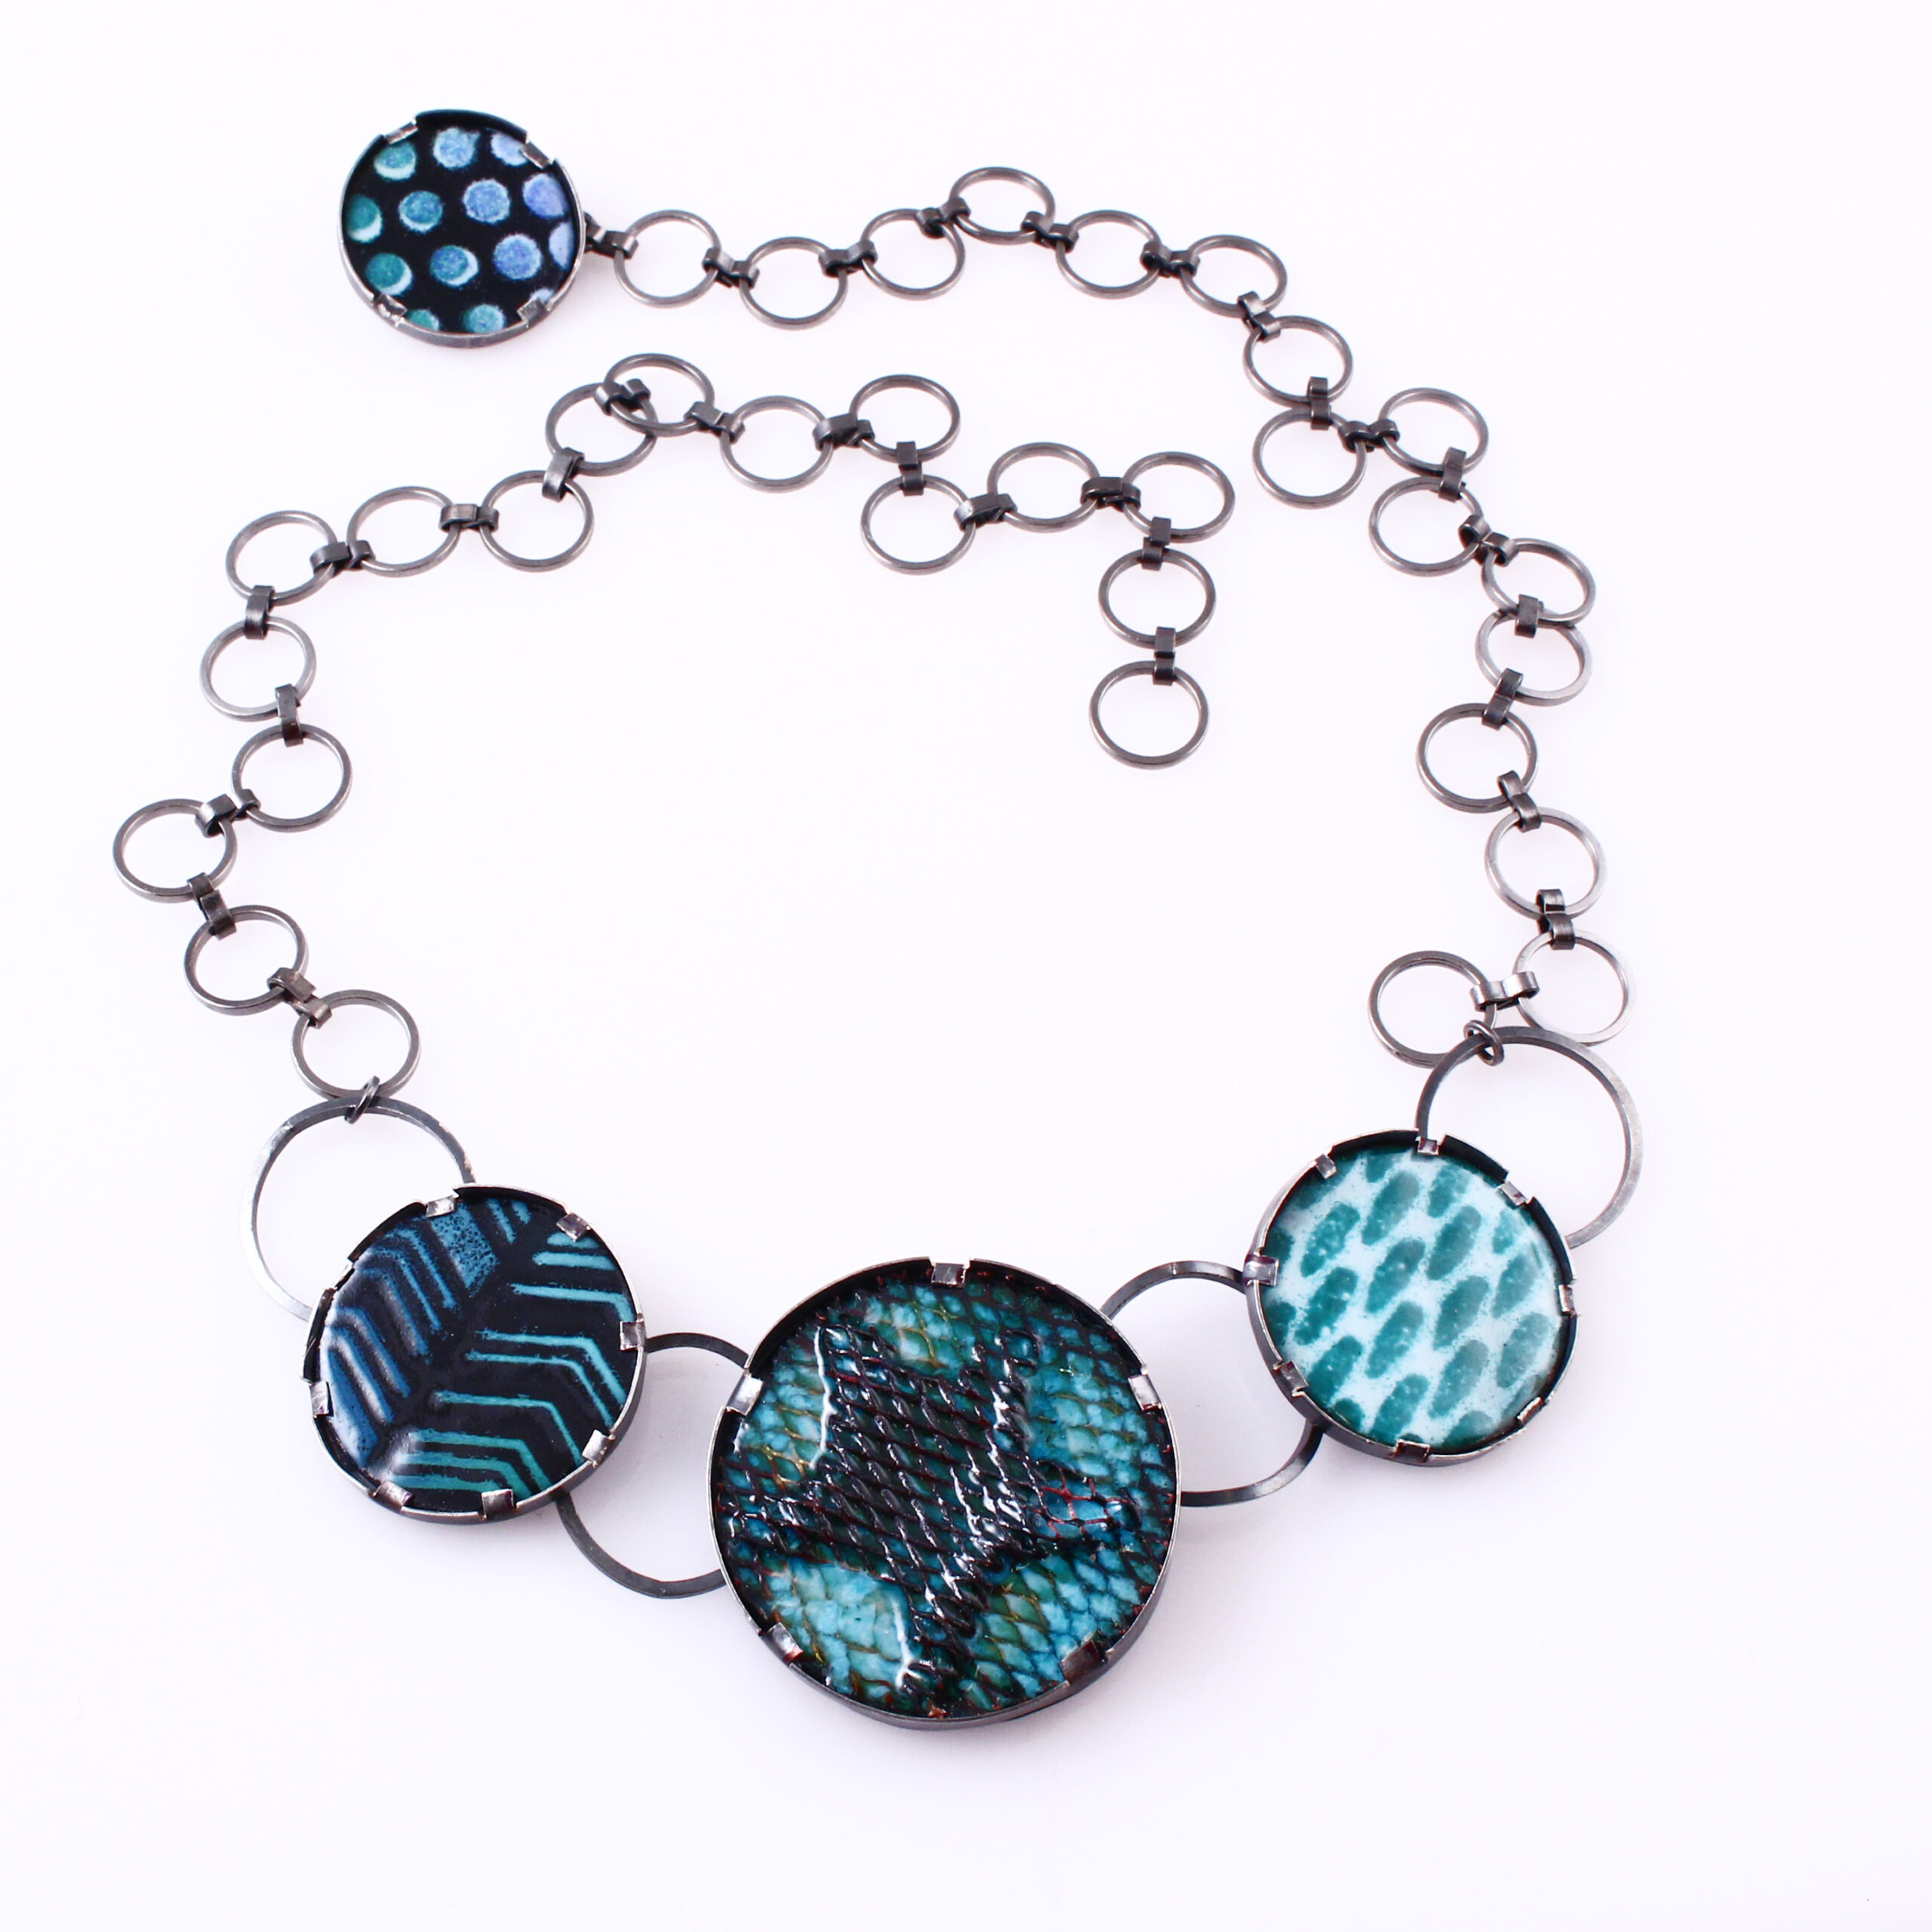 Ocean necklace_jewelry - Jessica McGrath